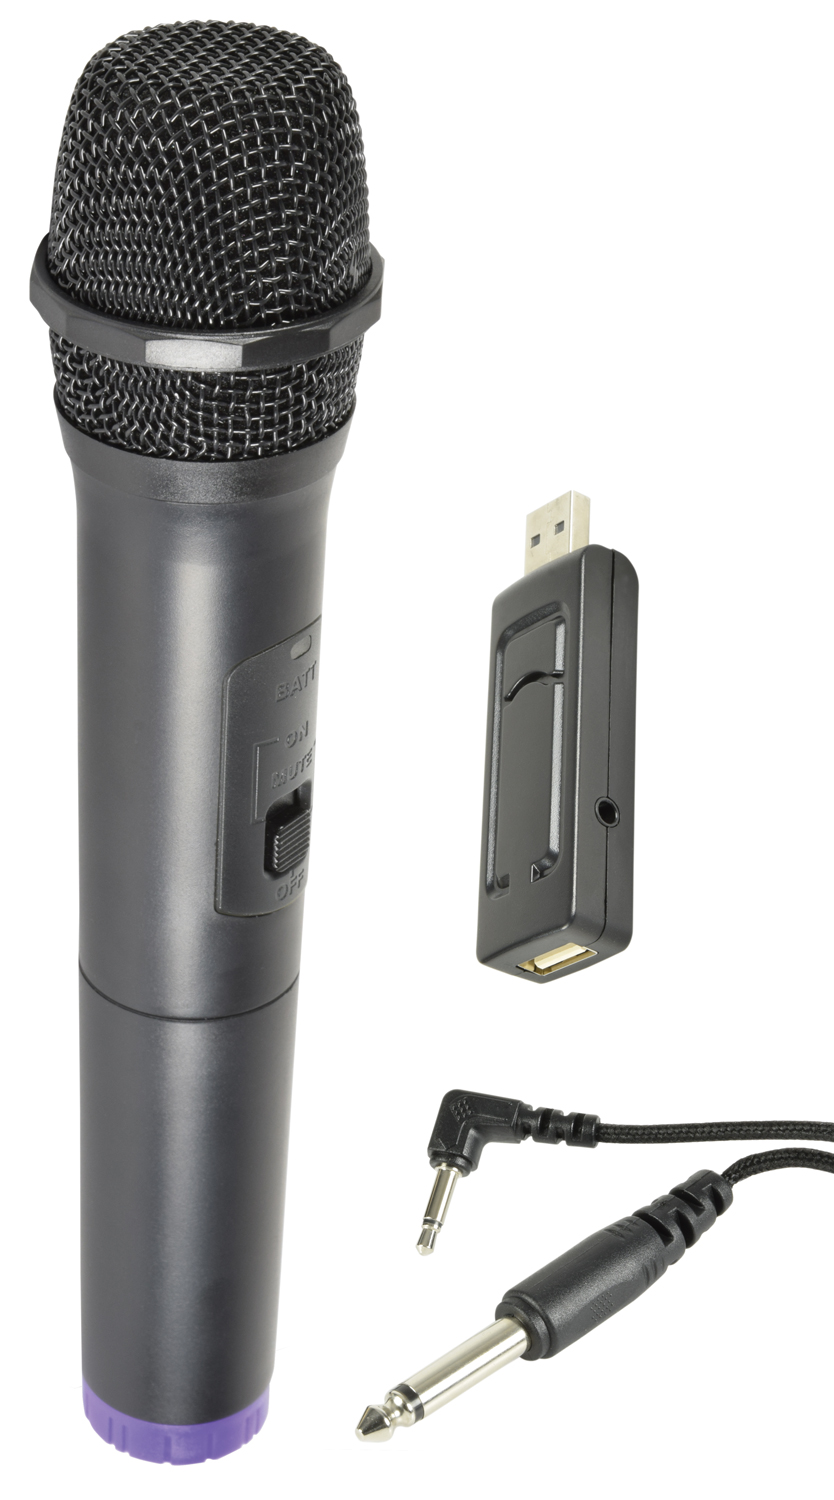 U-MIC Wireless Set - USB Powered Handheld UHF Microphone U-MIC USB Powered UHF Microphone 864.8MHz